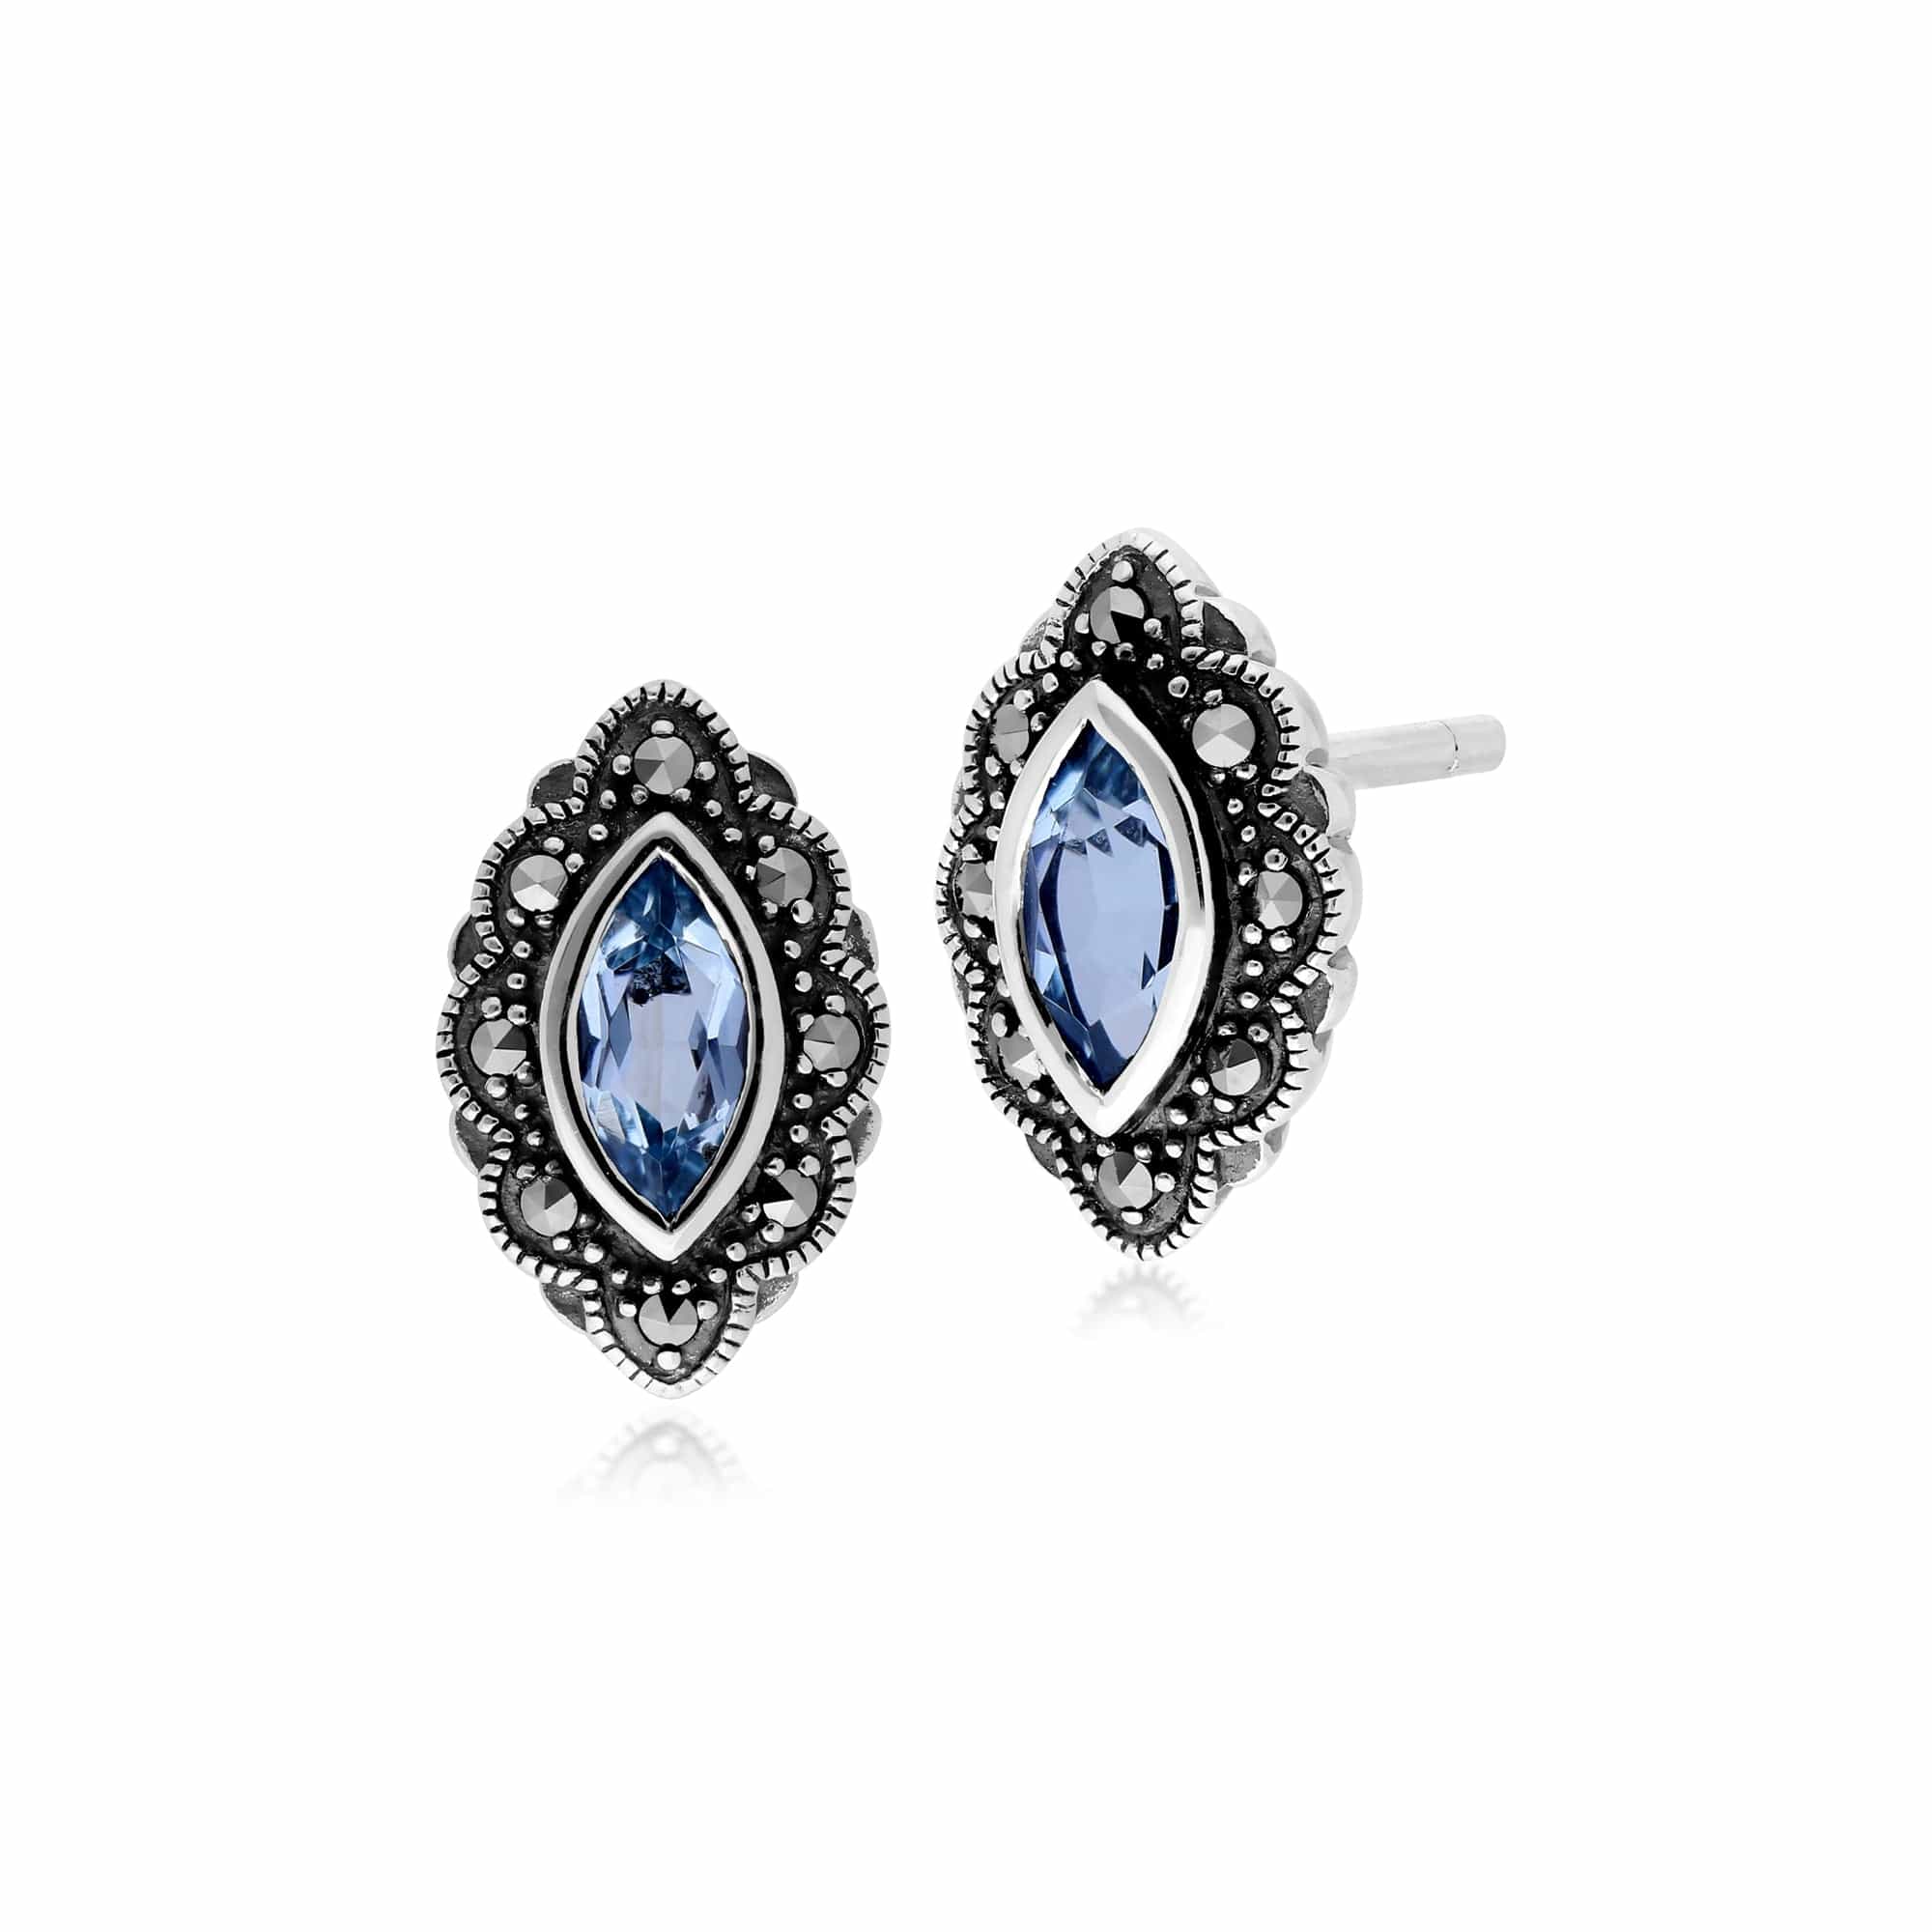 Art Nouveau Marquise Blue Topaz & Marcasite Stud Earrings in 925 Sterling Silver